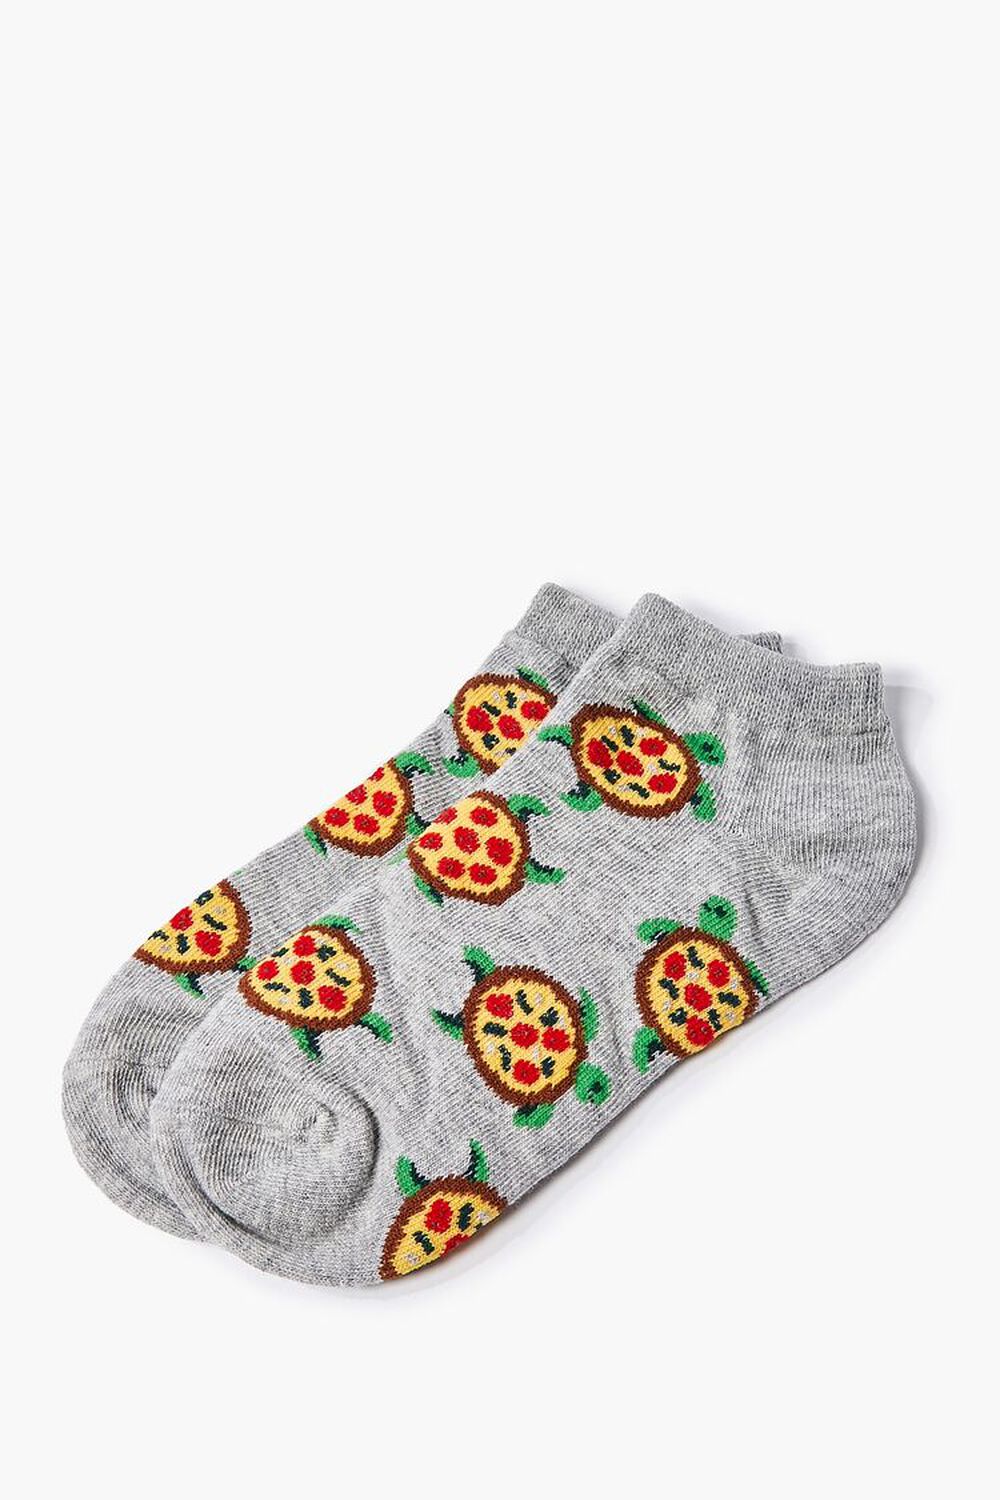 Pizza Print Ankle Socks, image 2